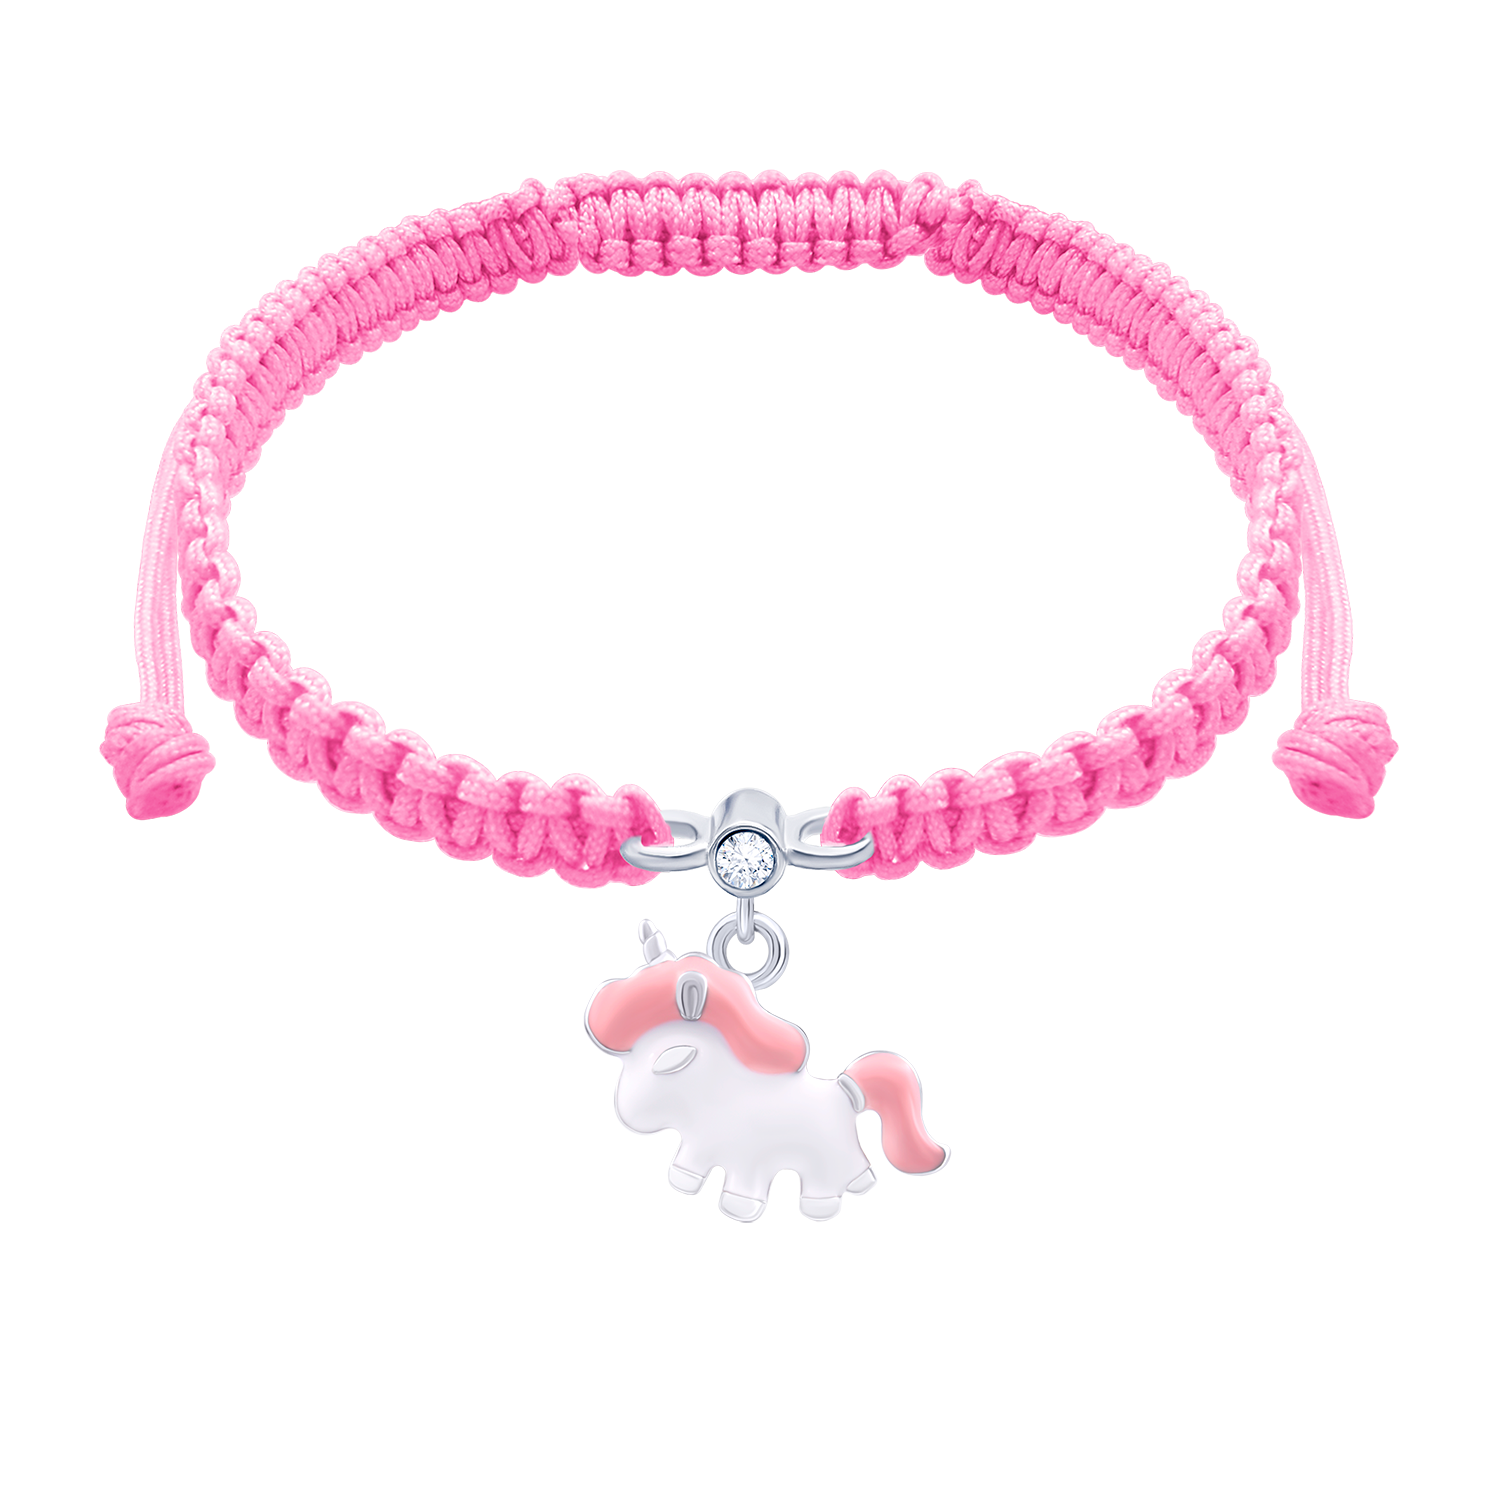 Braided bracelet Pink Unicorn